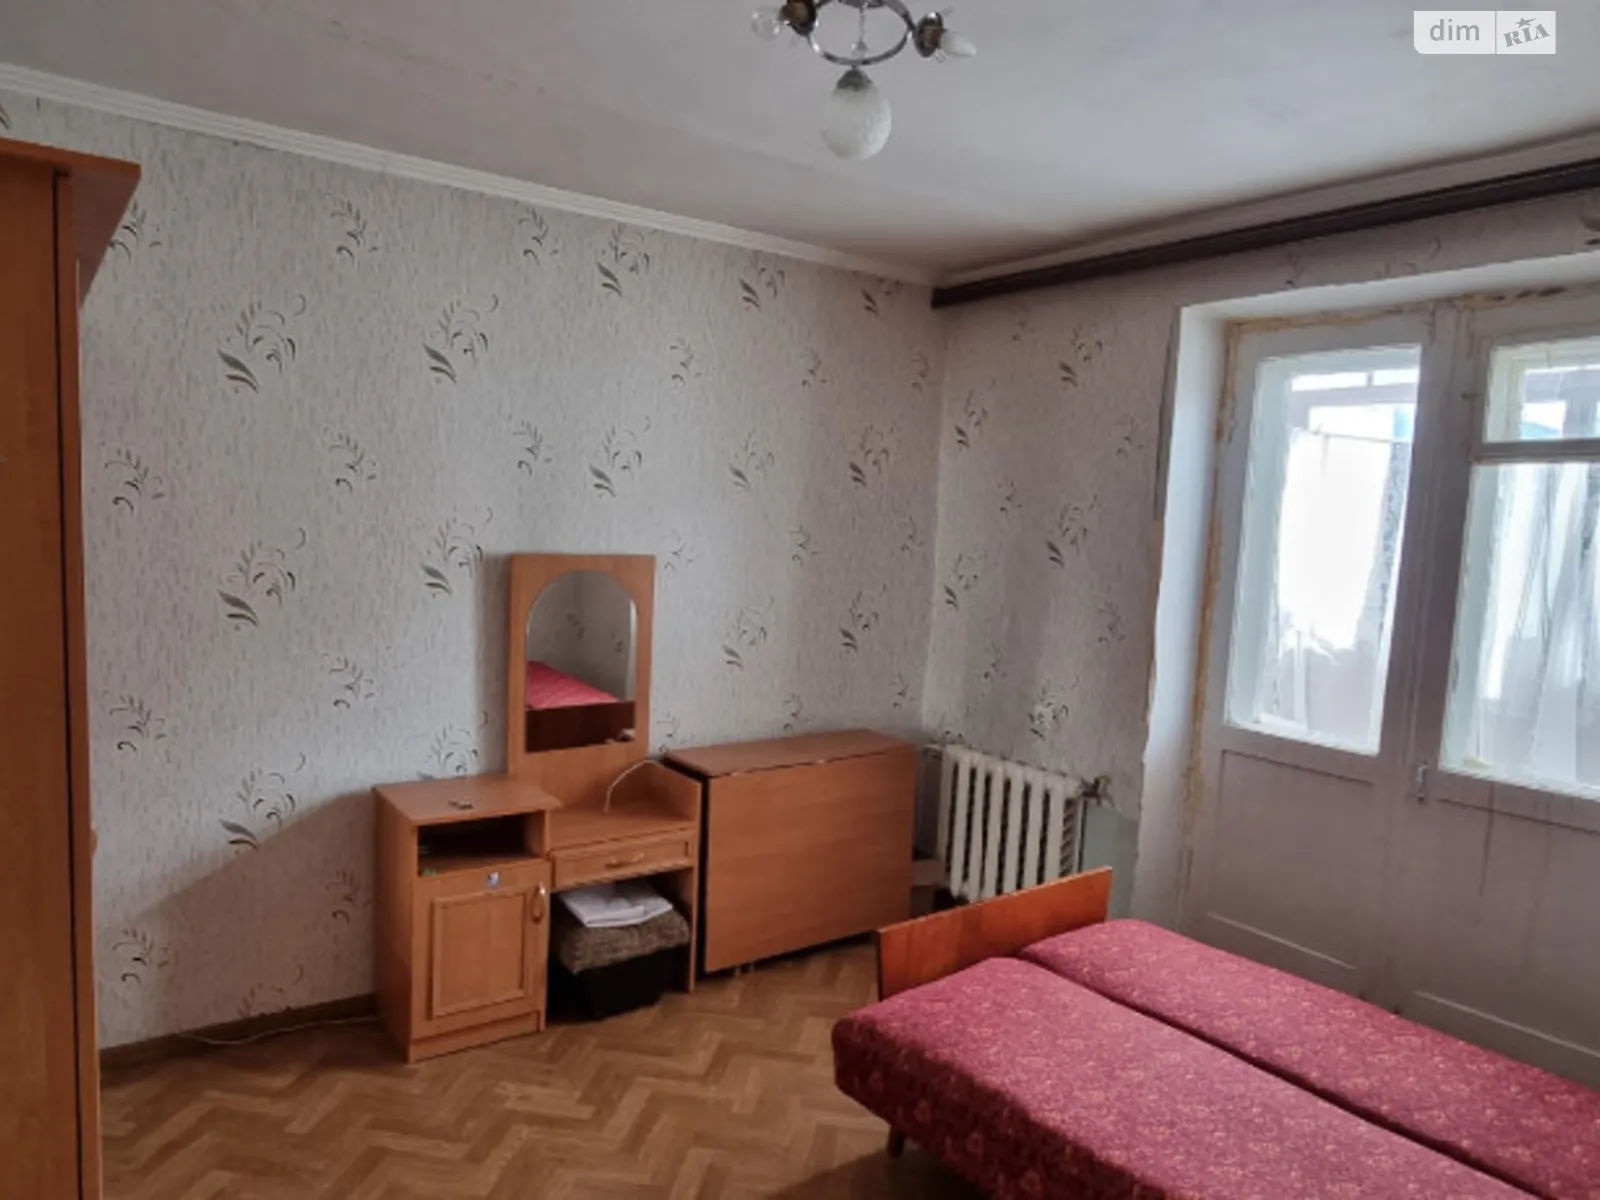 Продається 1-кімнатна квартира 23 кв. м у Хмельницькому, вул. Степана Бандери